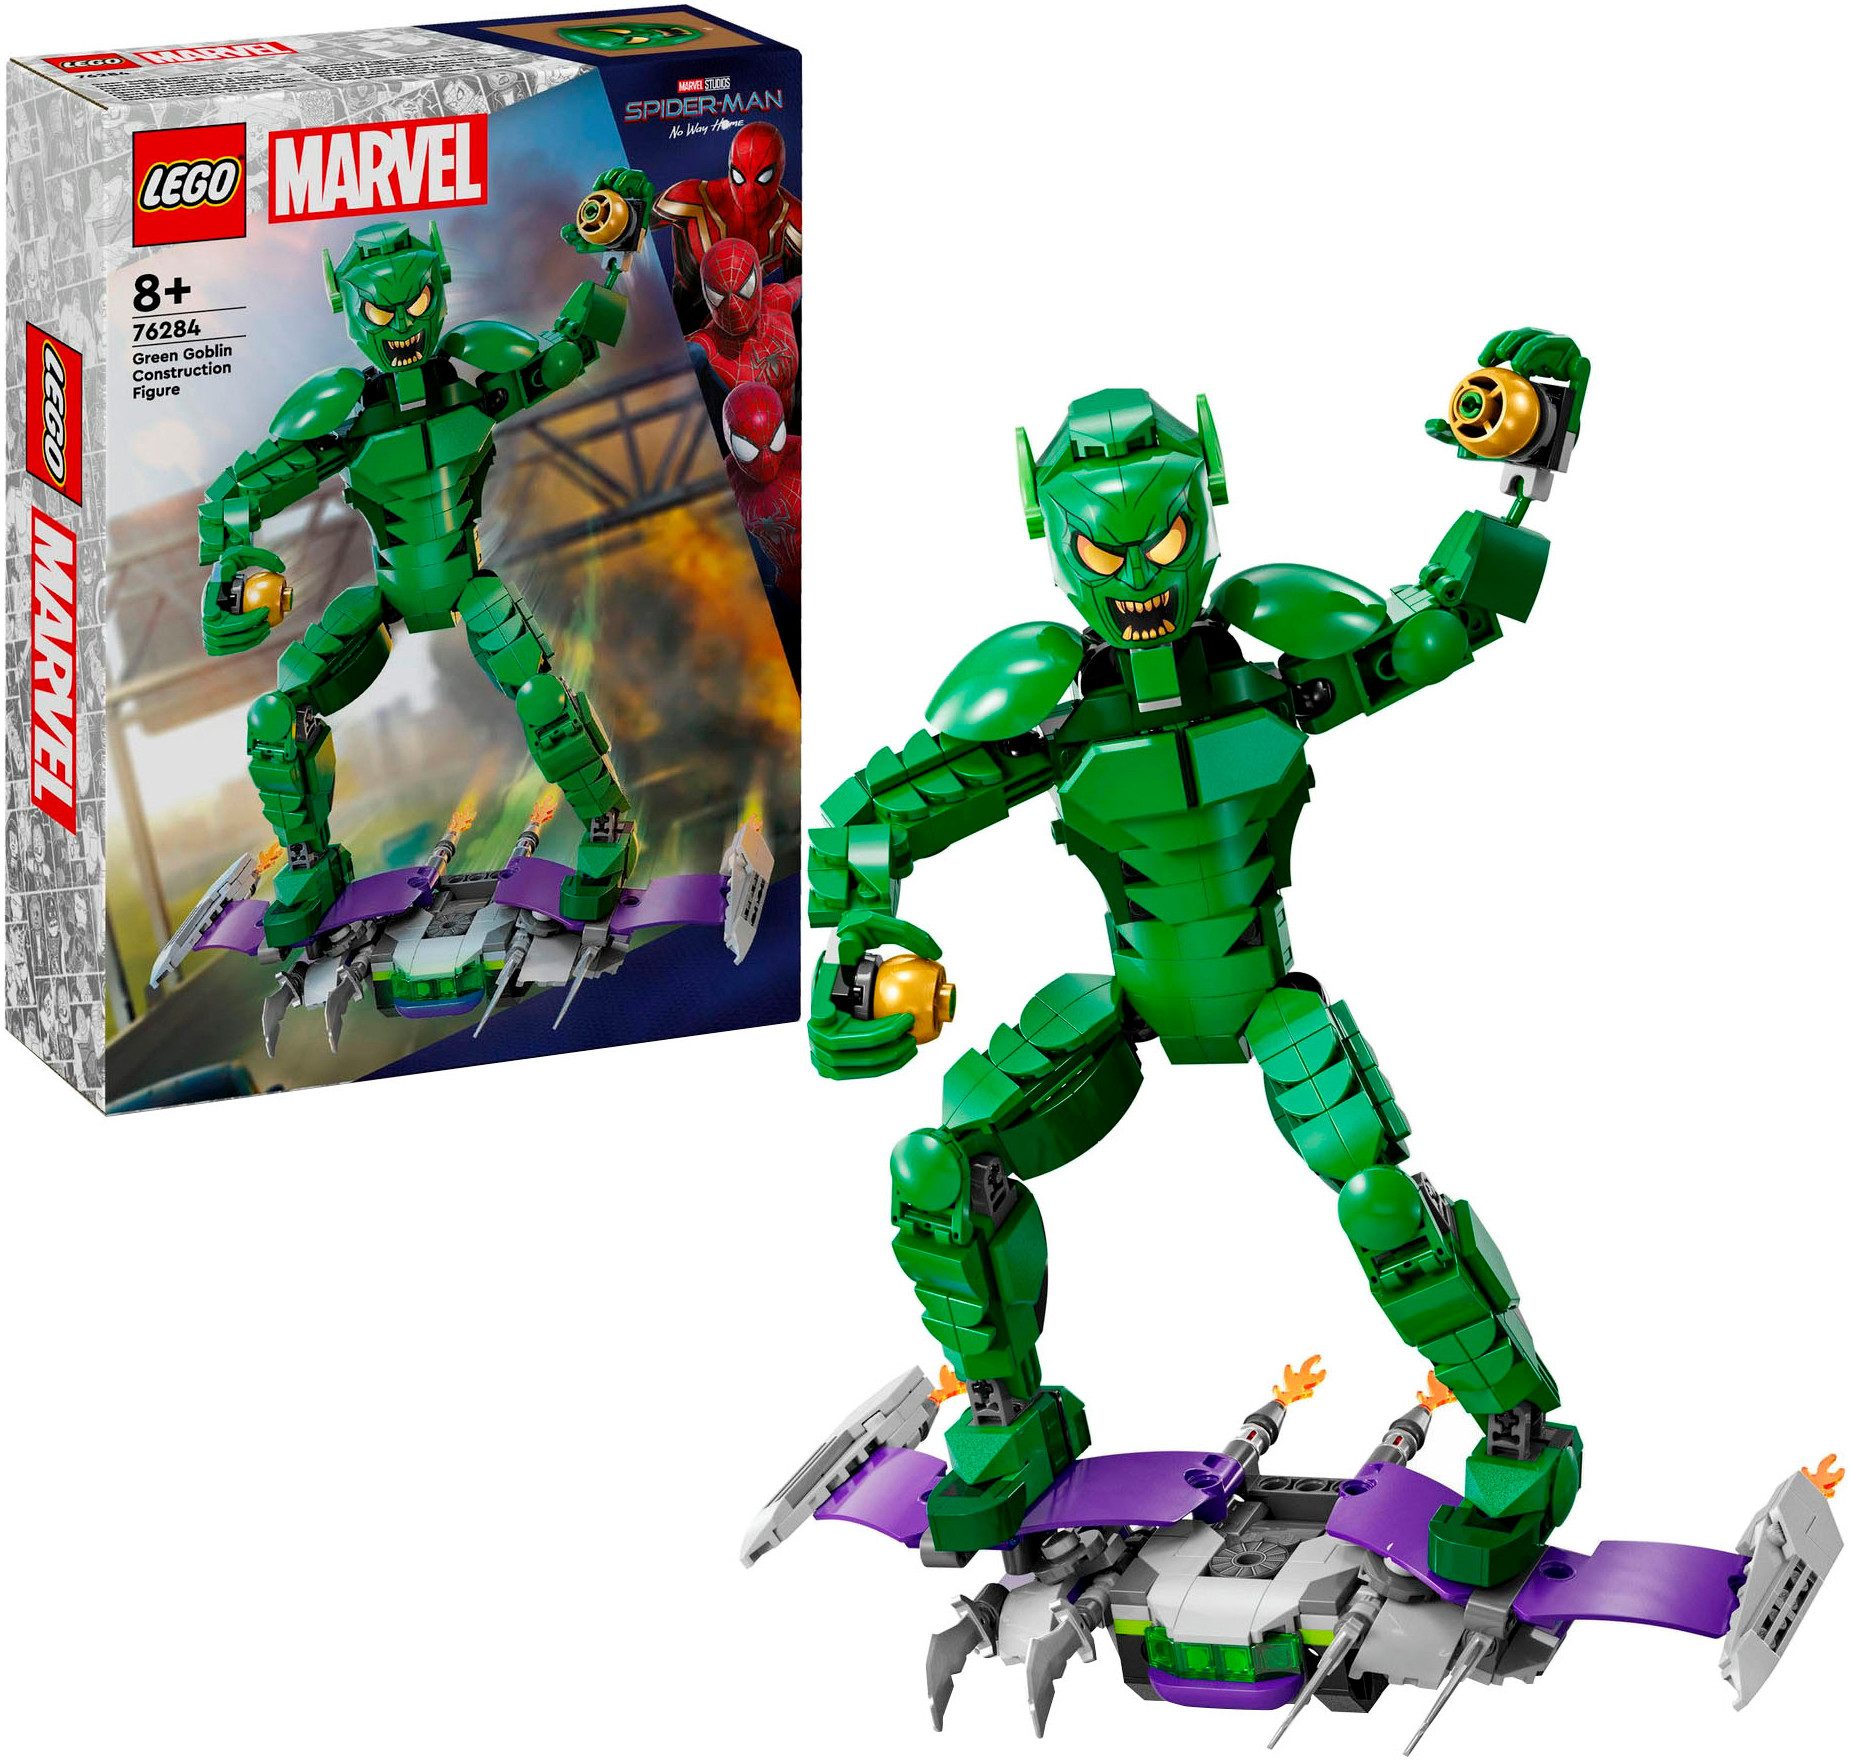 LEGO® Konstruktionsspielsteine Green Goblin Baufigur (76284), LEGO Super Heroes, (471 St), Made in Europe